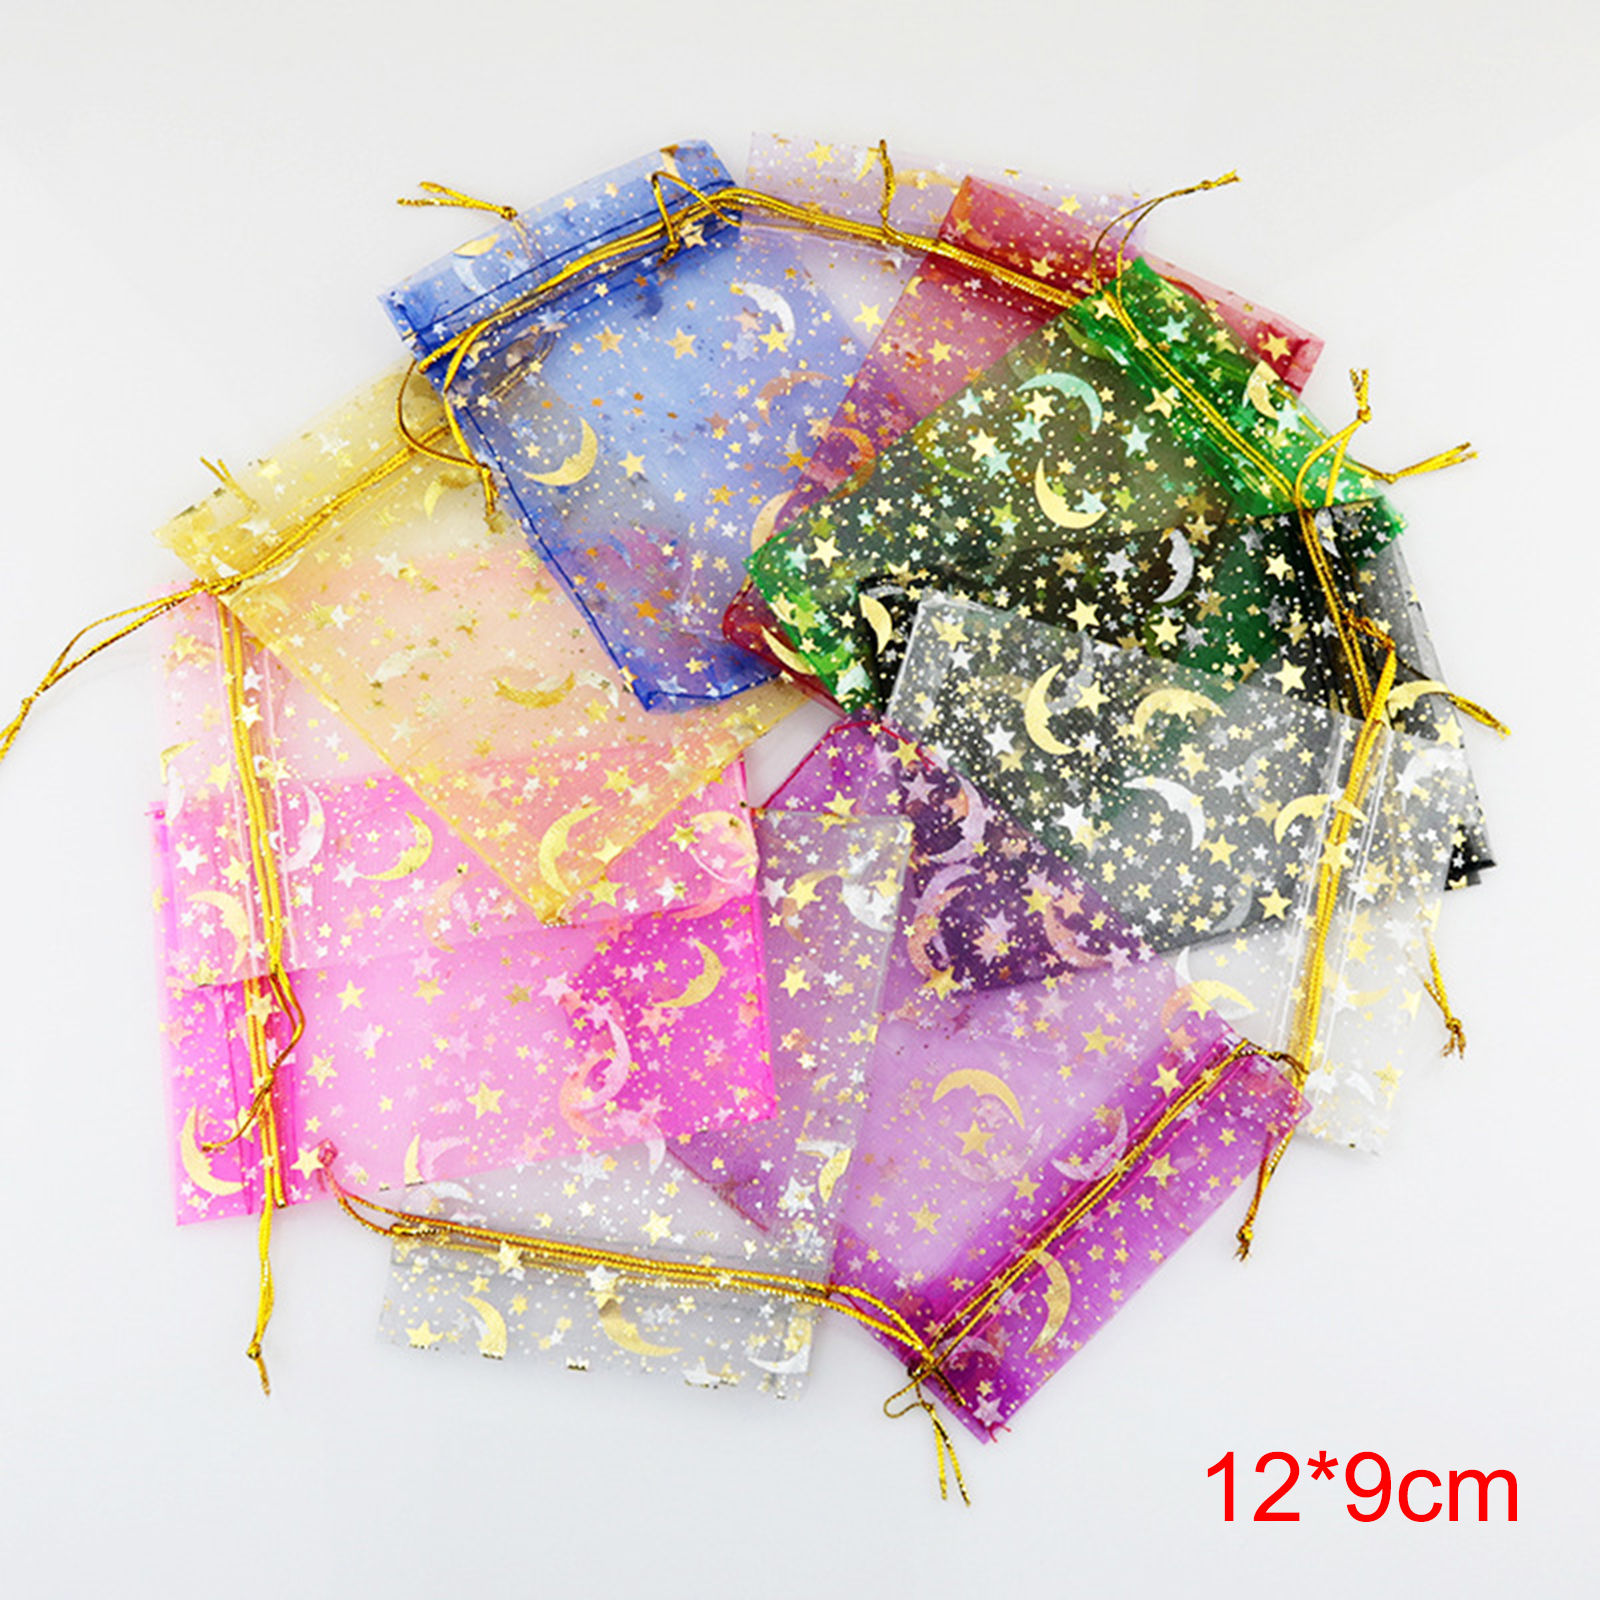 Picture of Wedding Gift Organza Galaxy Drawstring Bags Half Moon At Random Color Star 12cm x9cm(4 6/8" x3 4/8"), 20 PCs